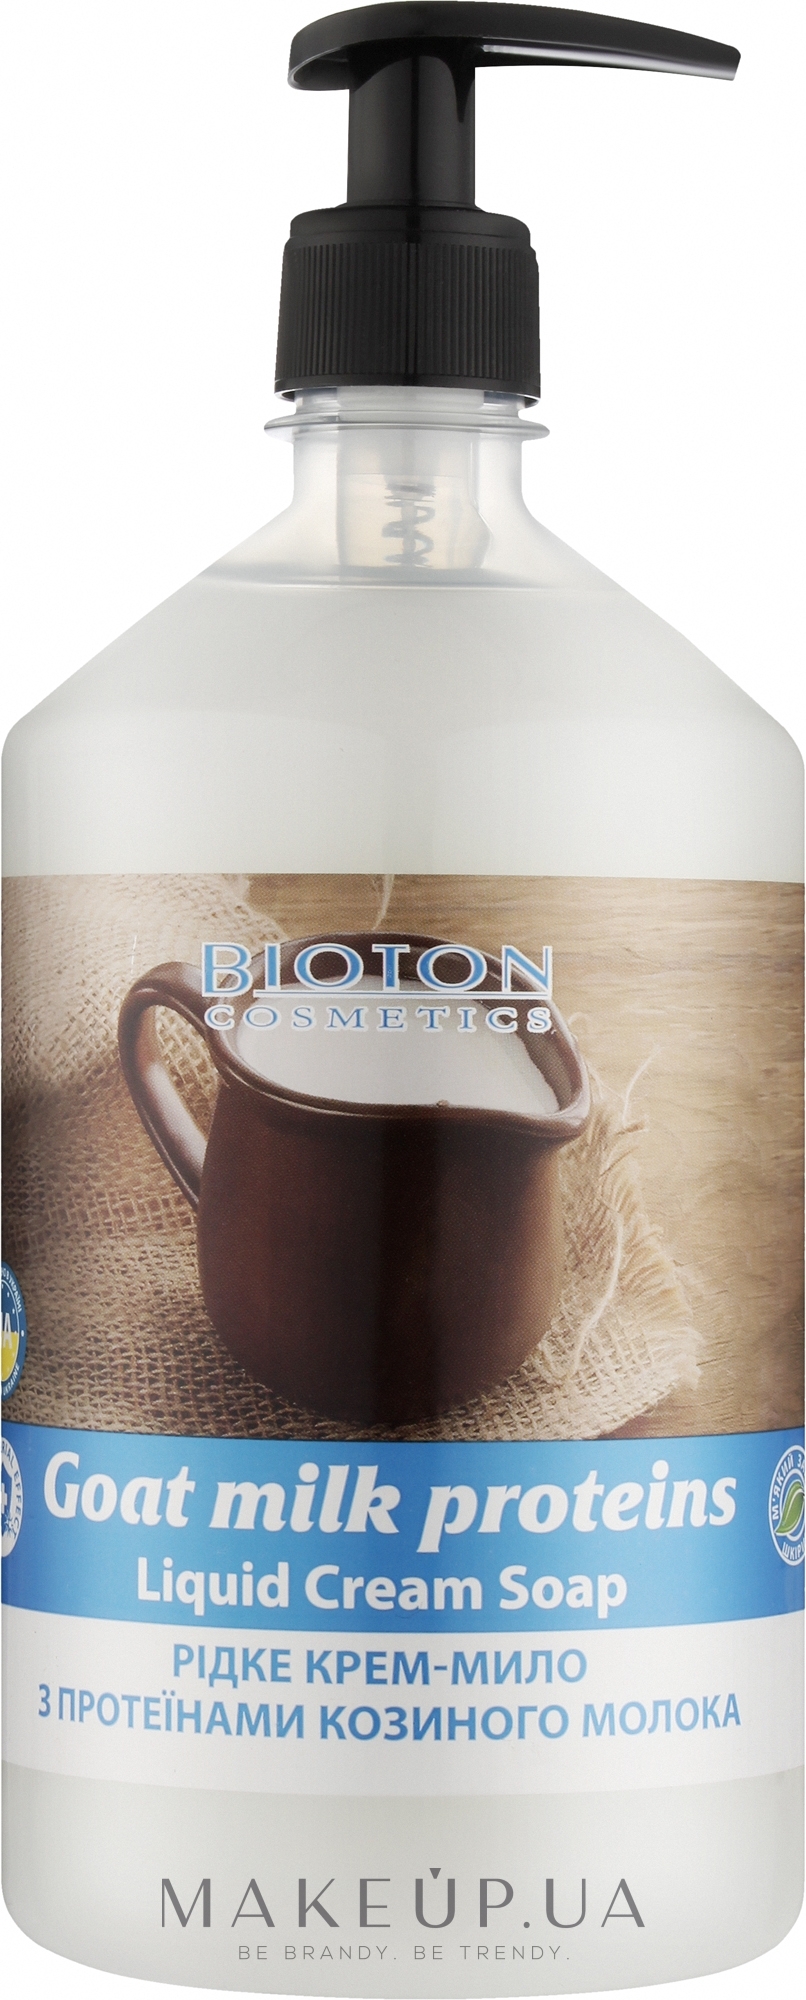 Жидкое крем-мыло с протеинами козьего молока - Bioton Cosmetics Liquid Cream Soap — фото 1000ml